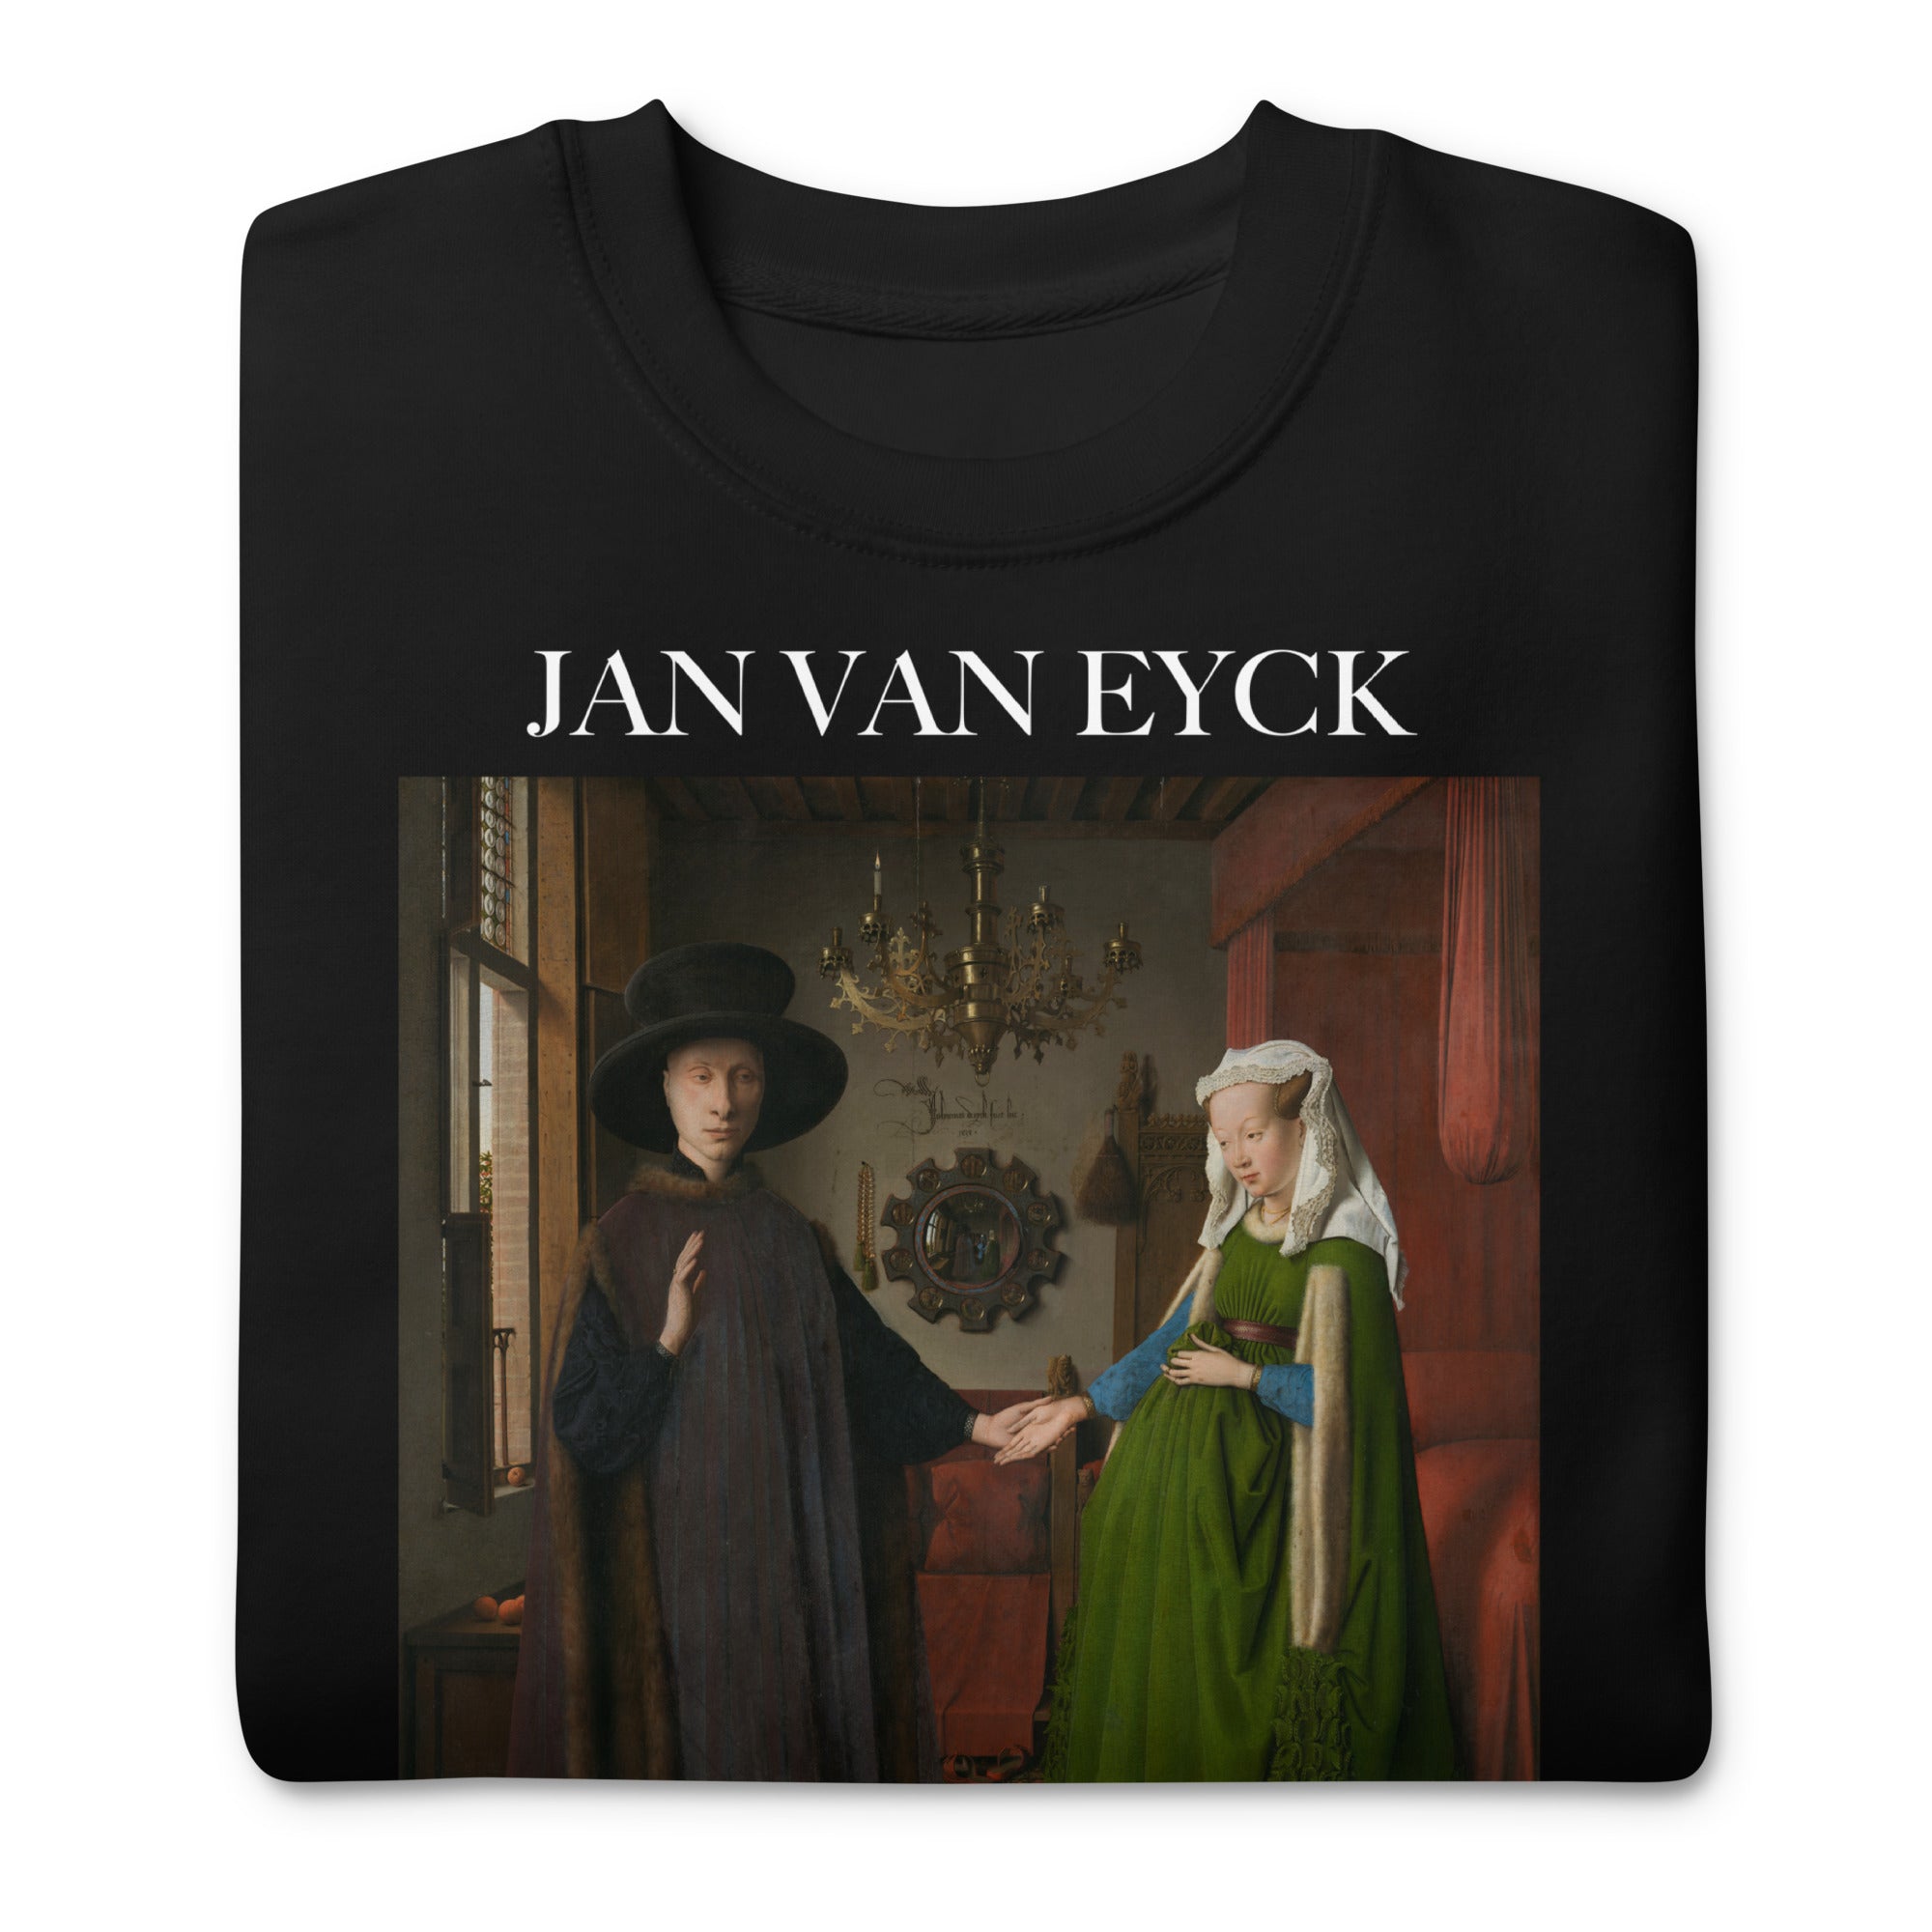 Jan van Eyck 'The Arnolfini Portrait' Famous Painting Sweatshirt | Unisex Premium Sweatshirt